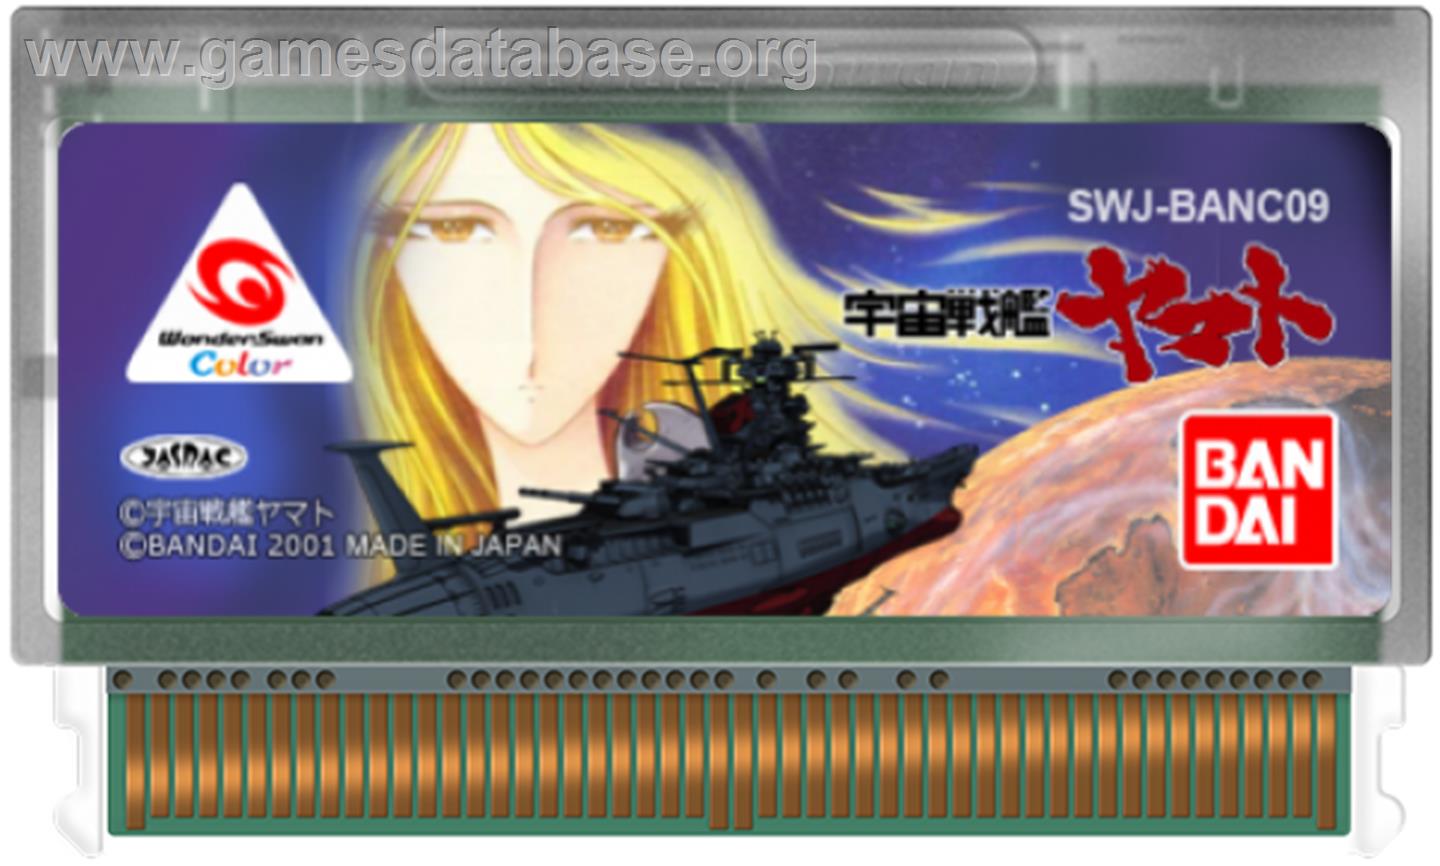 Space Battleship Yamato - Bandai WonderSwan Color - Artwork - Cartridge